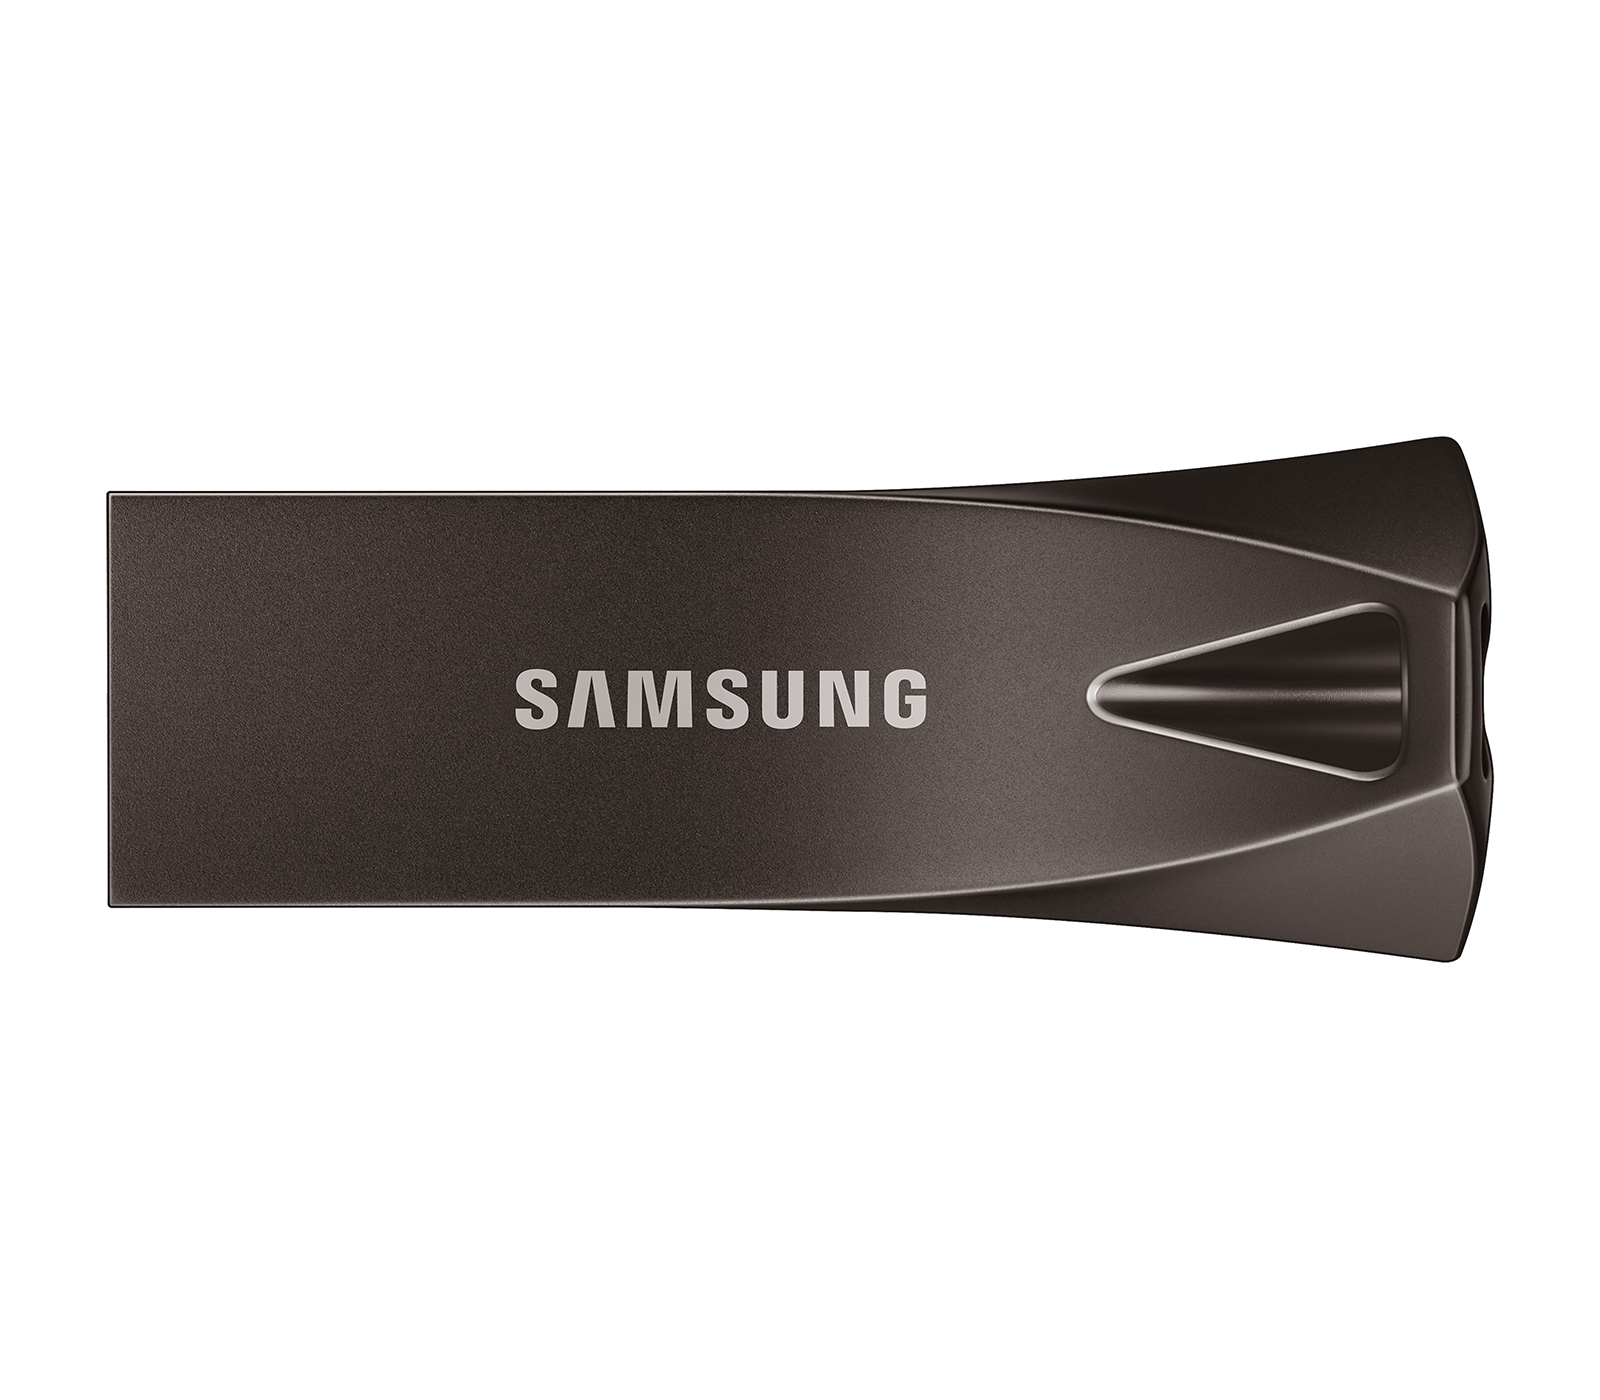 Excursion I agree simple USB 3.1 Flash Drive BAR Plus 64GB Titan Gray Memory & Storage -  MUF-64BE4/AM | Samsung US